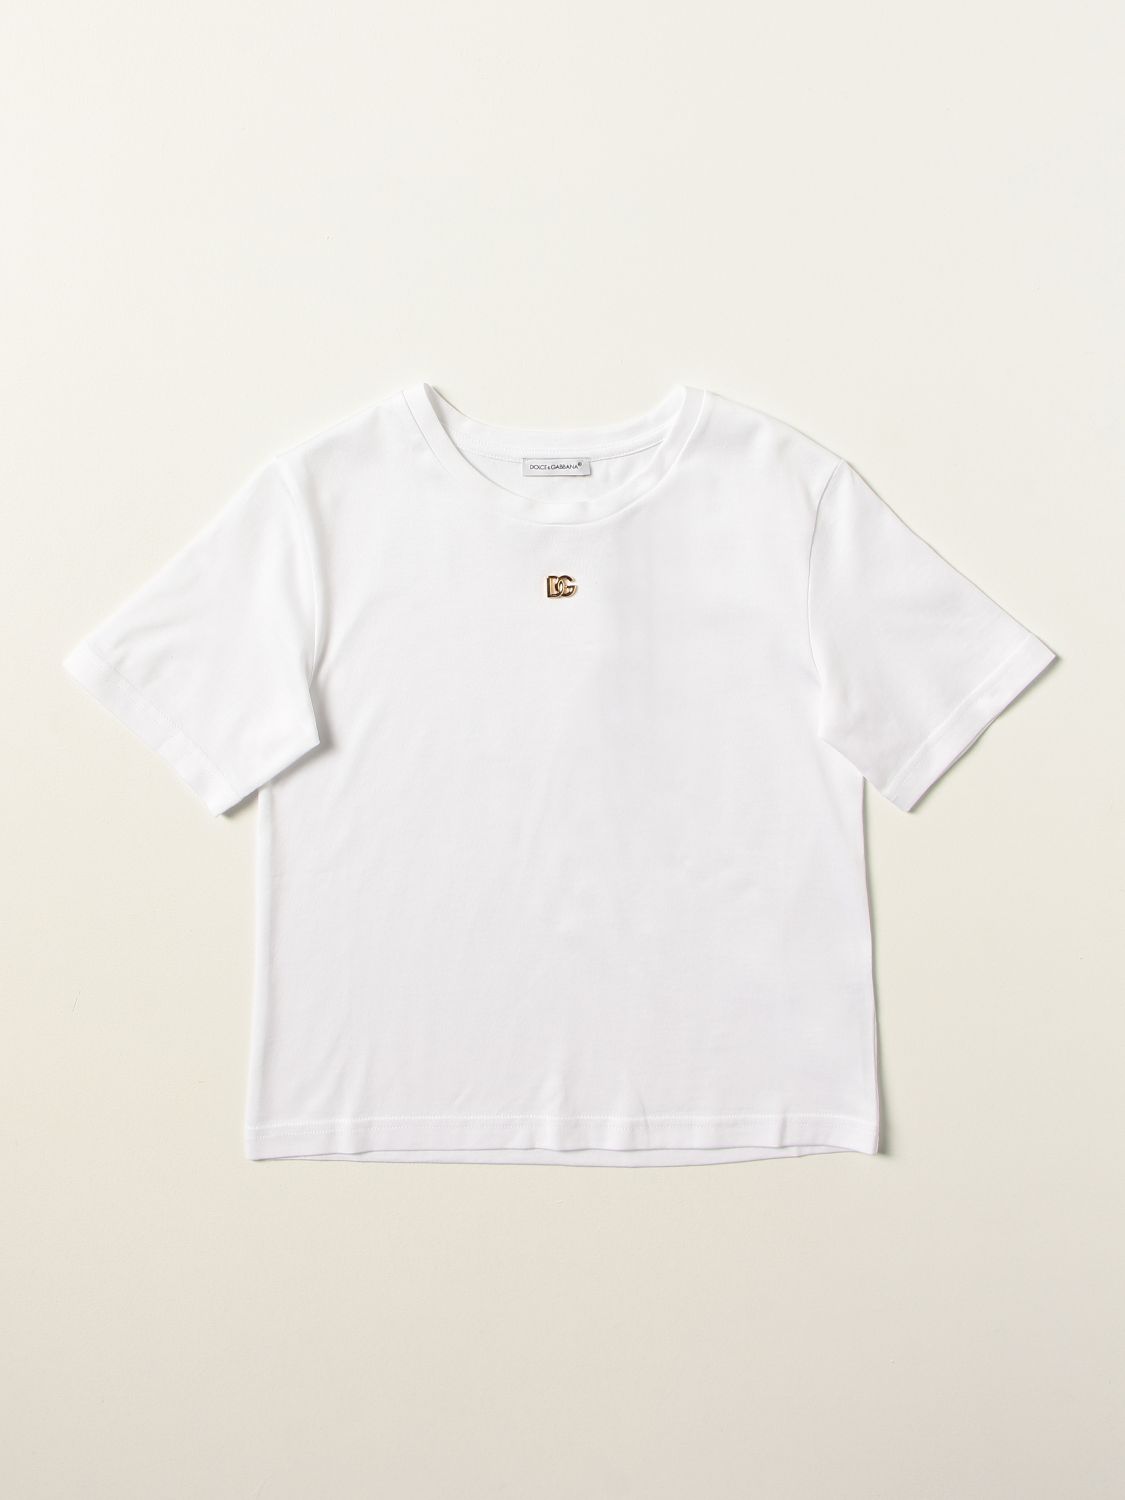 Canotta in cotone con logo Giglio.com Bambina Abbigliamento Top e t-shirt Top Tank top 